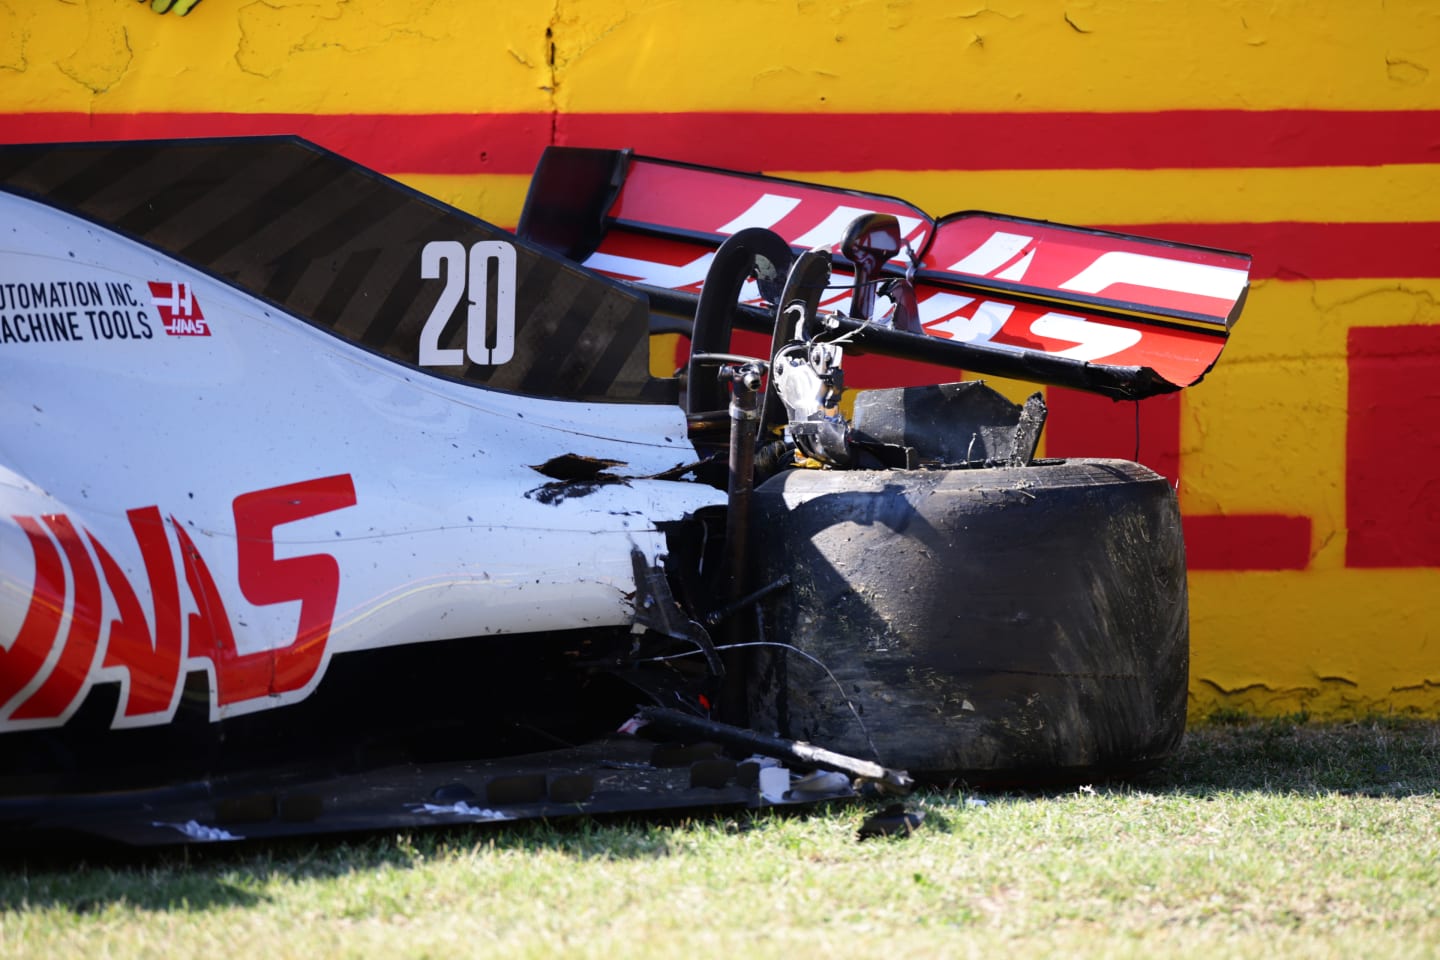 SCARPERIA, ITALY - SEPTEMBER 13: The broken car of Kevin Magnussen of Denmark driving the (20) Haas